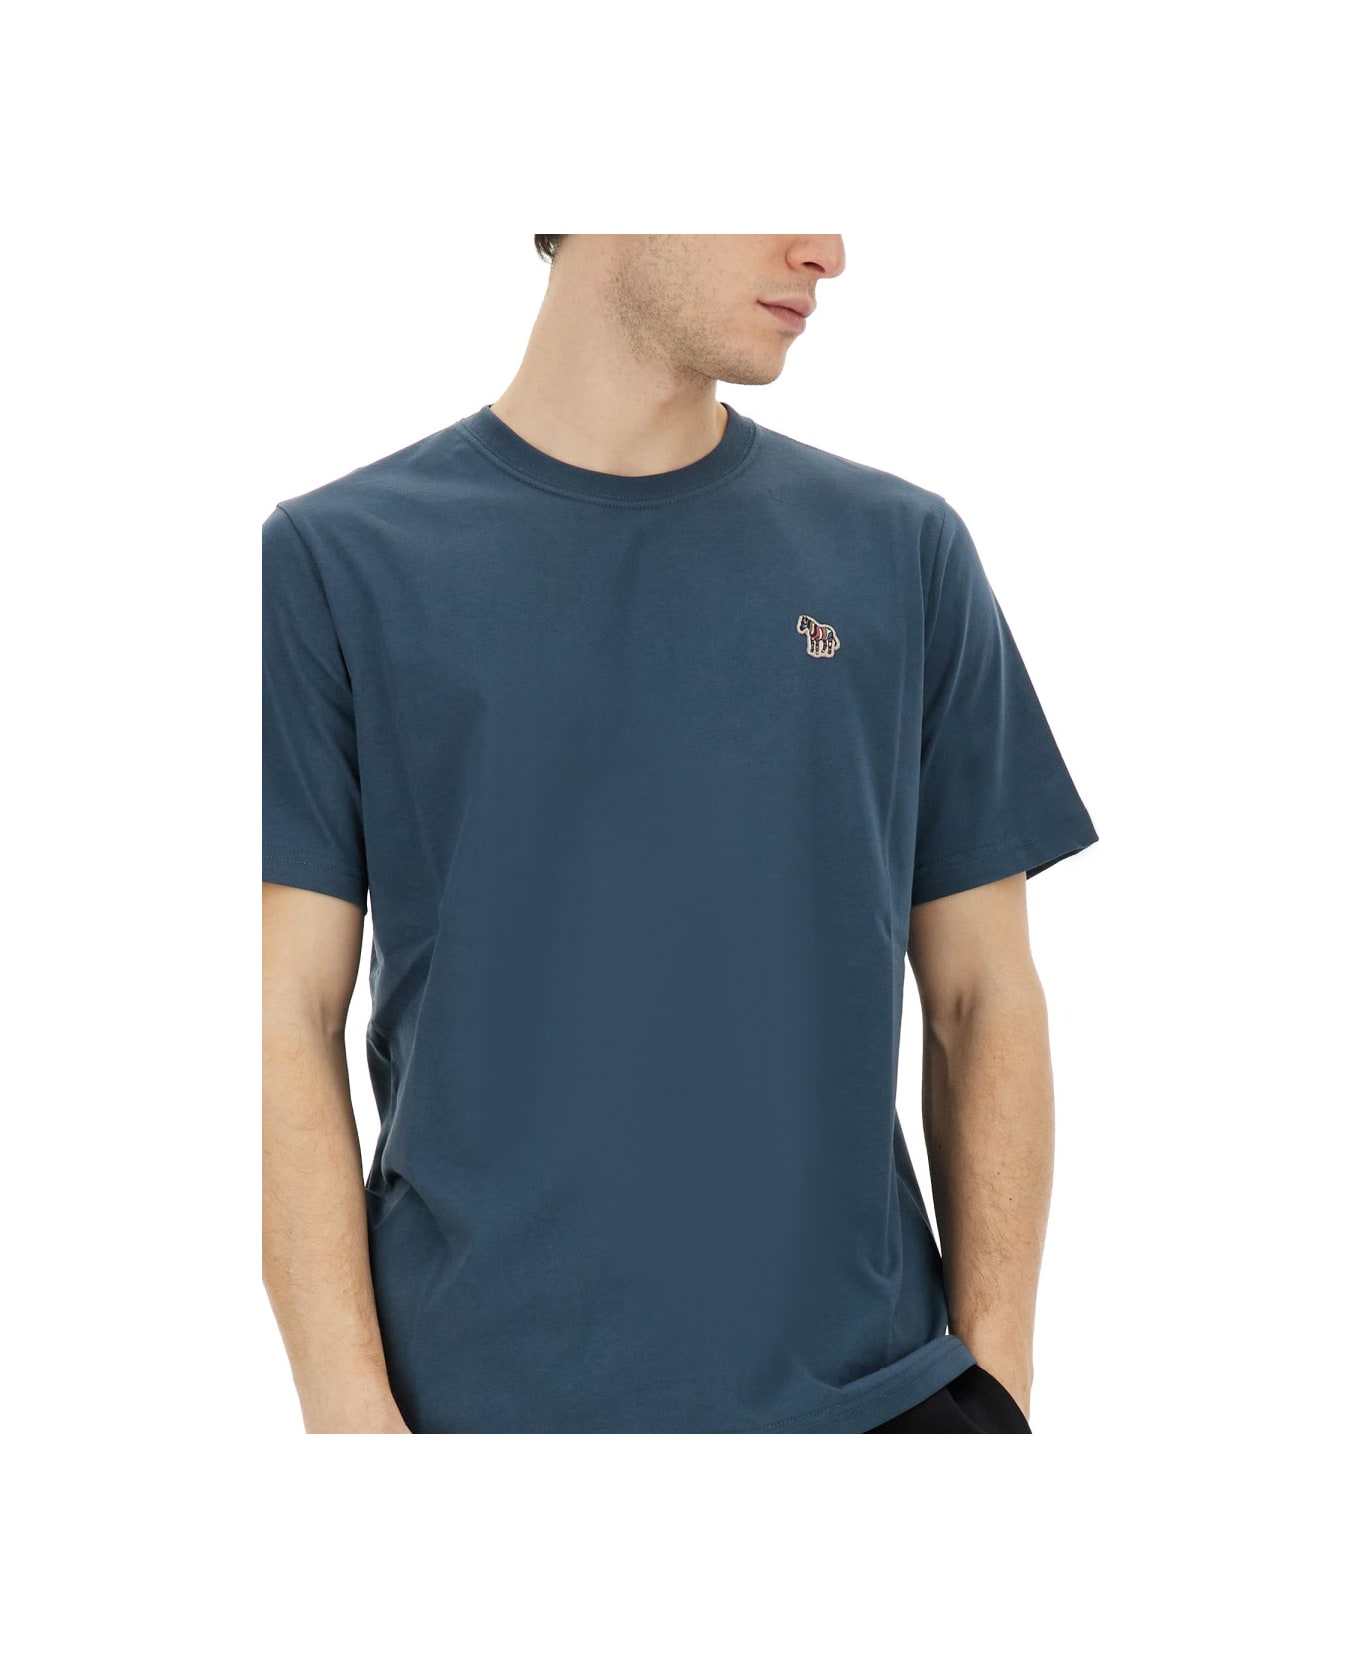 Paul Smith 'zebra' T-shirt - Blue